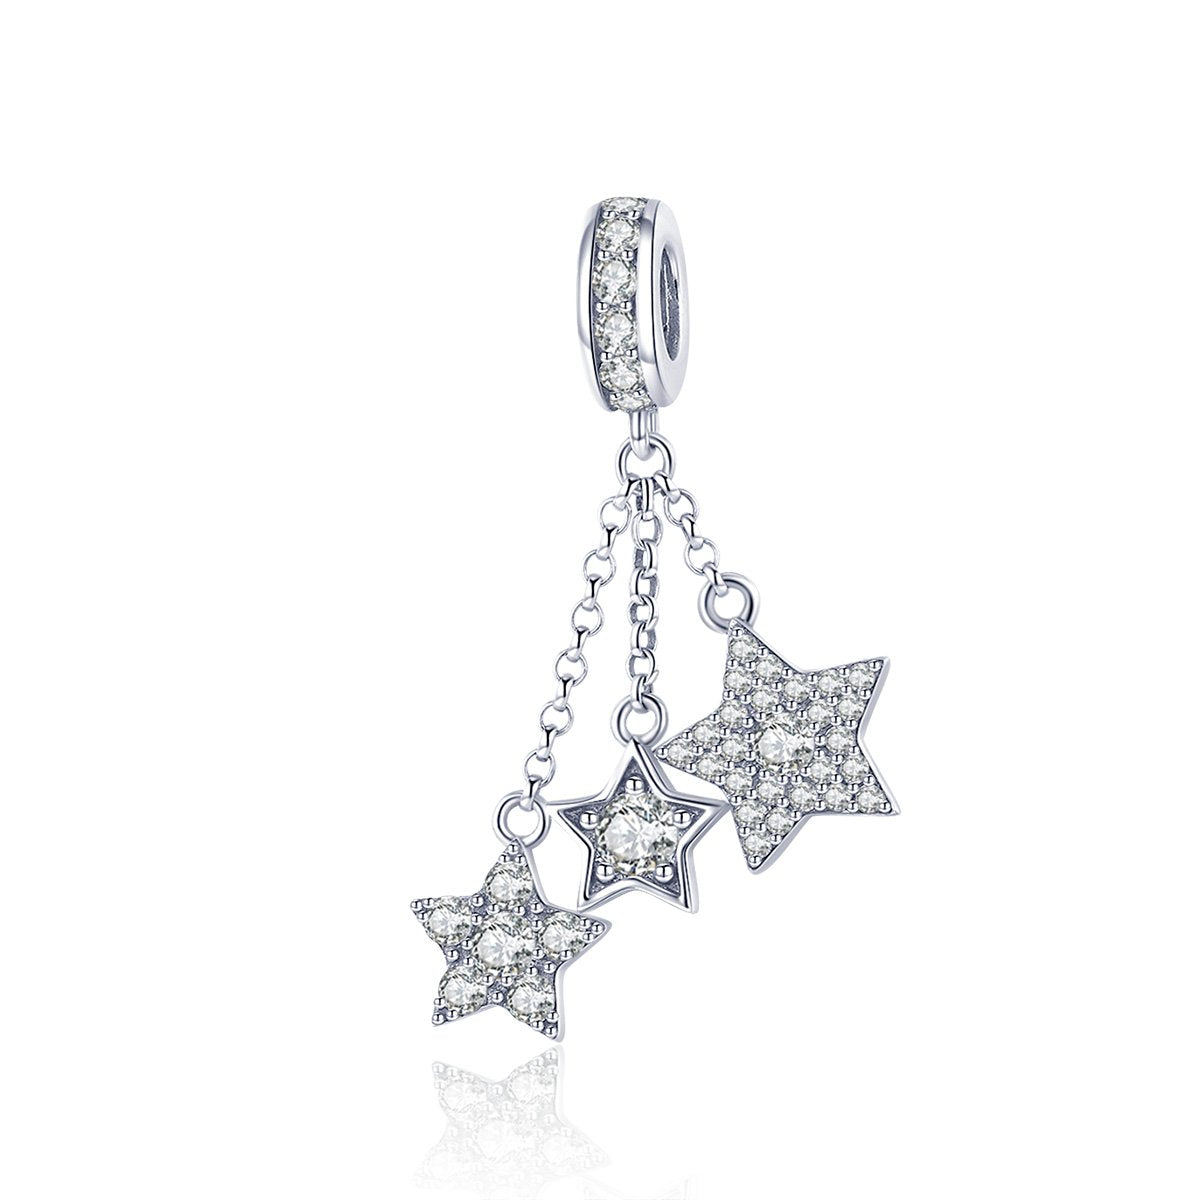 Sterling 925 silver charm the tri-stars pendant fits Pandora charm and European charm bracelet Xaxe.com